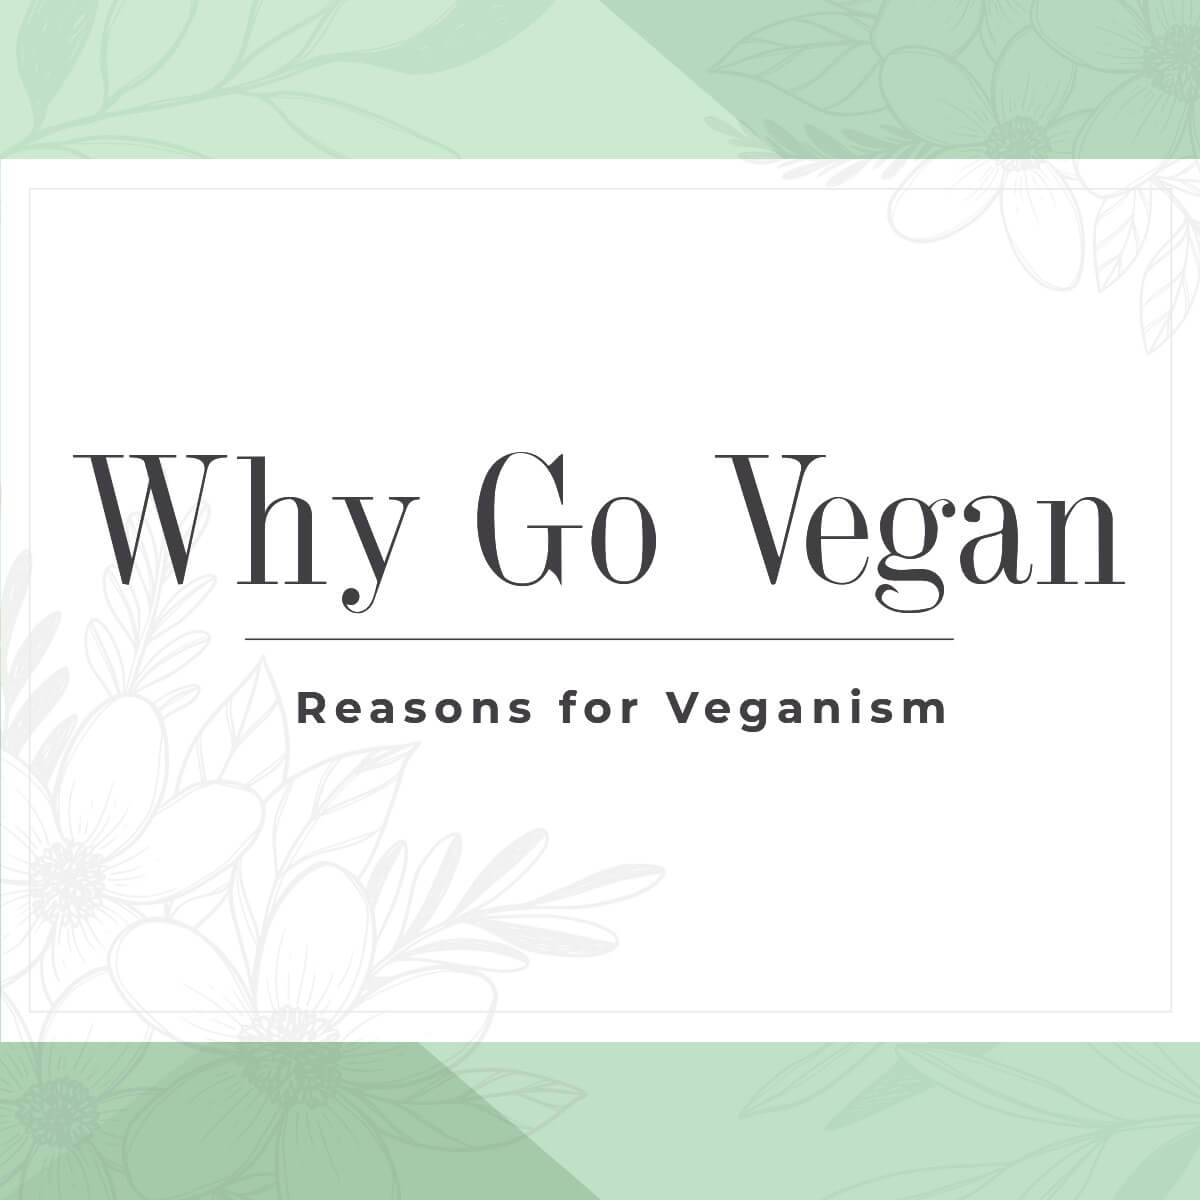 Why Go Vegan - Reasons for Veganism